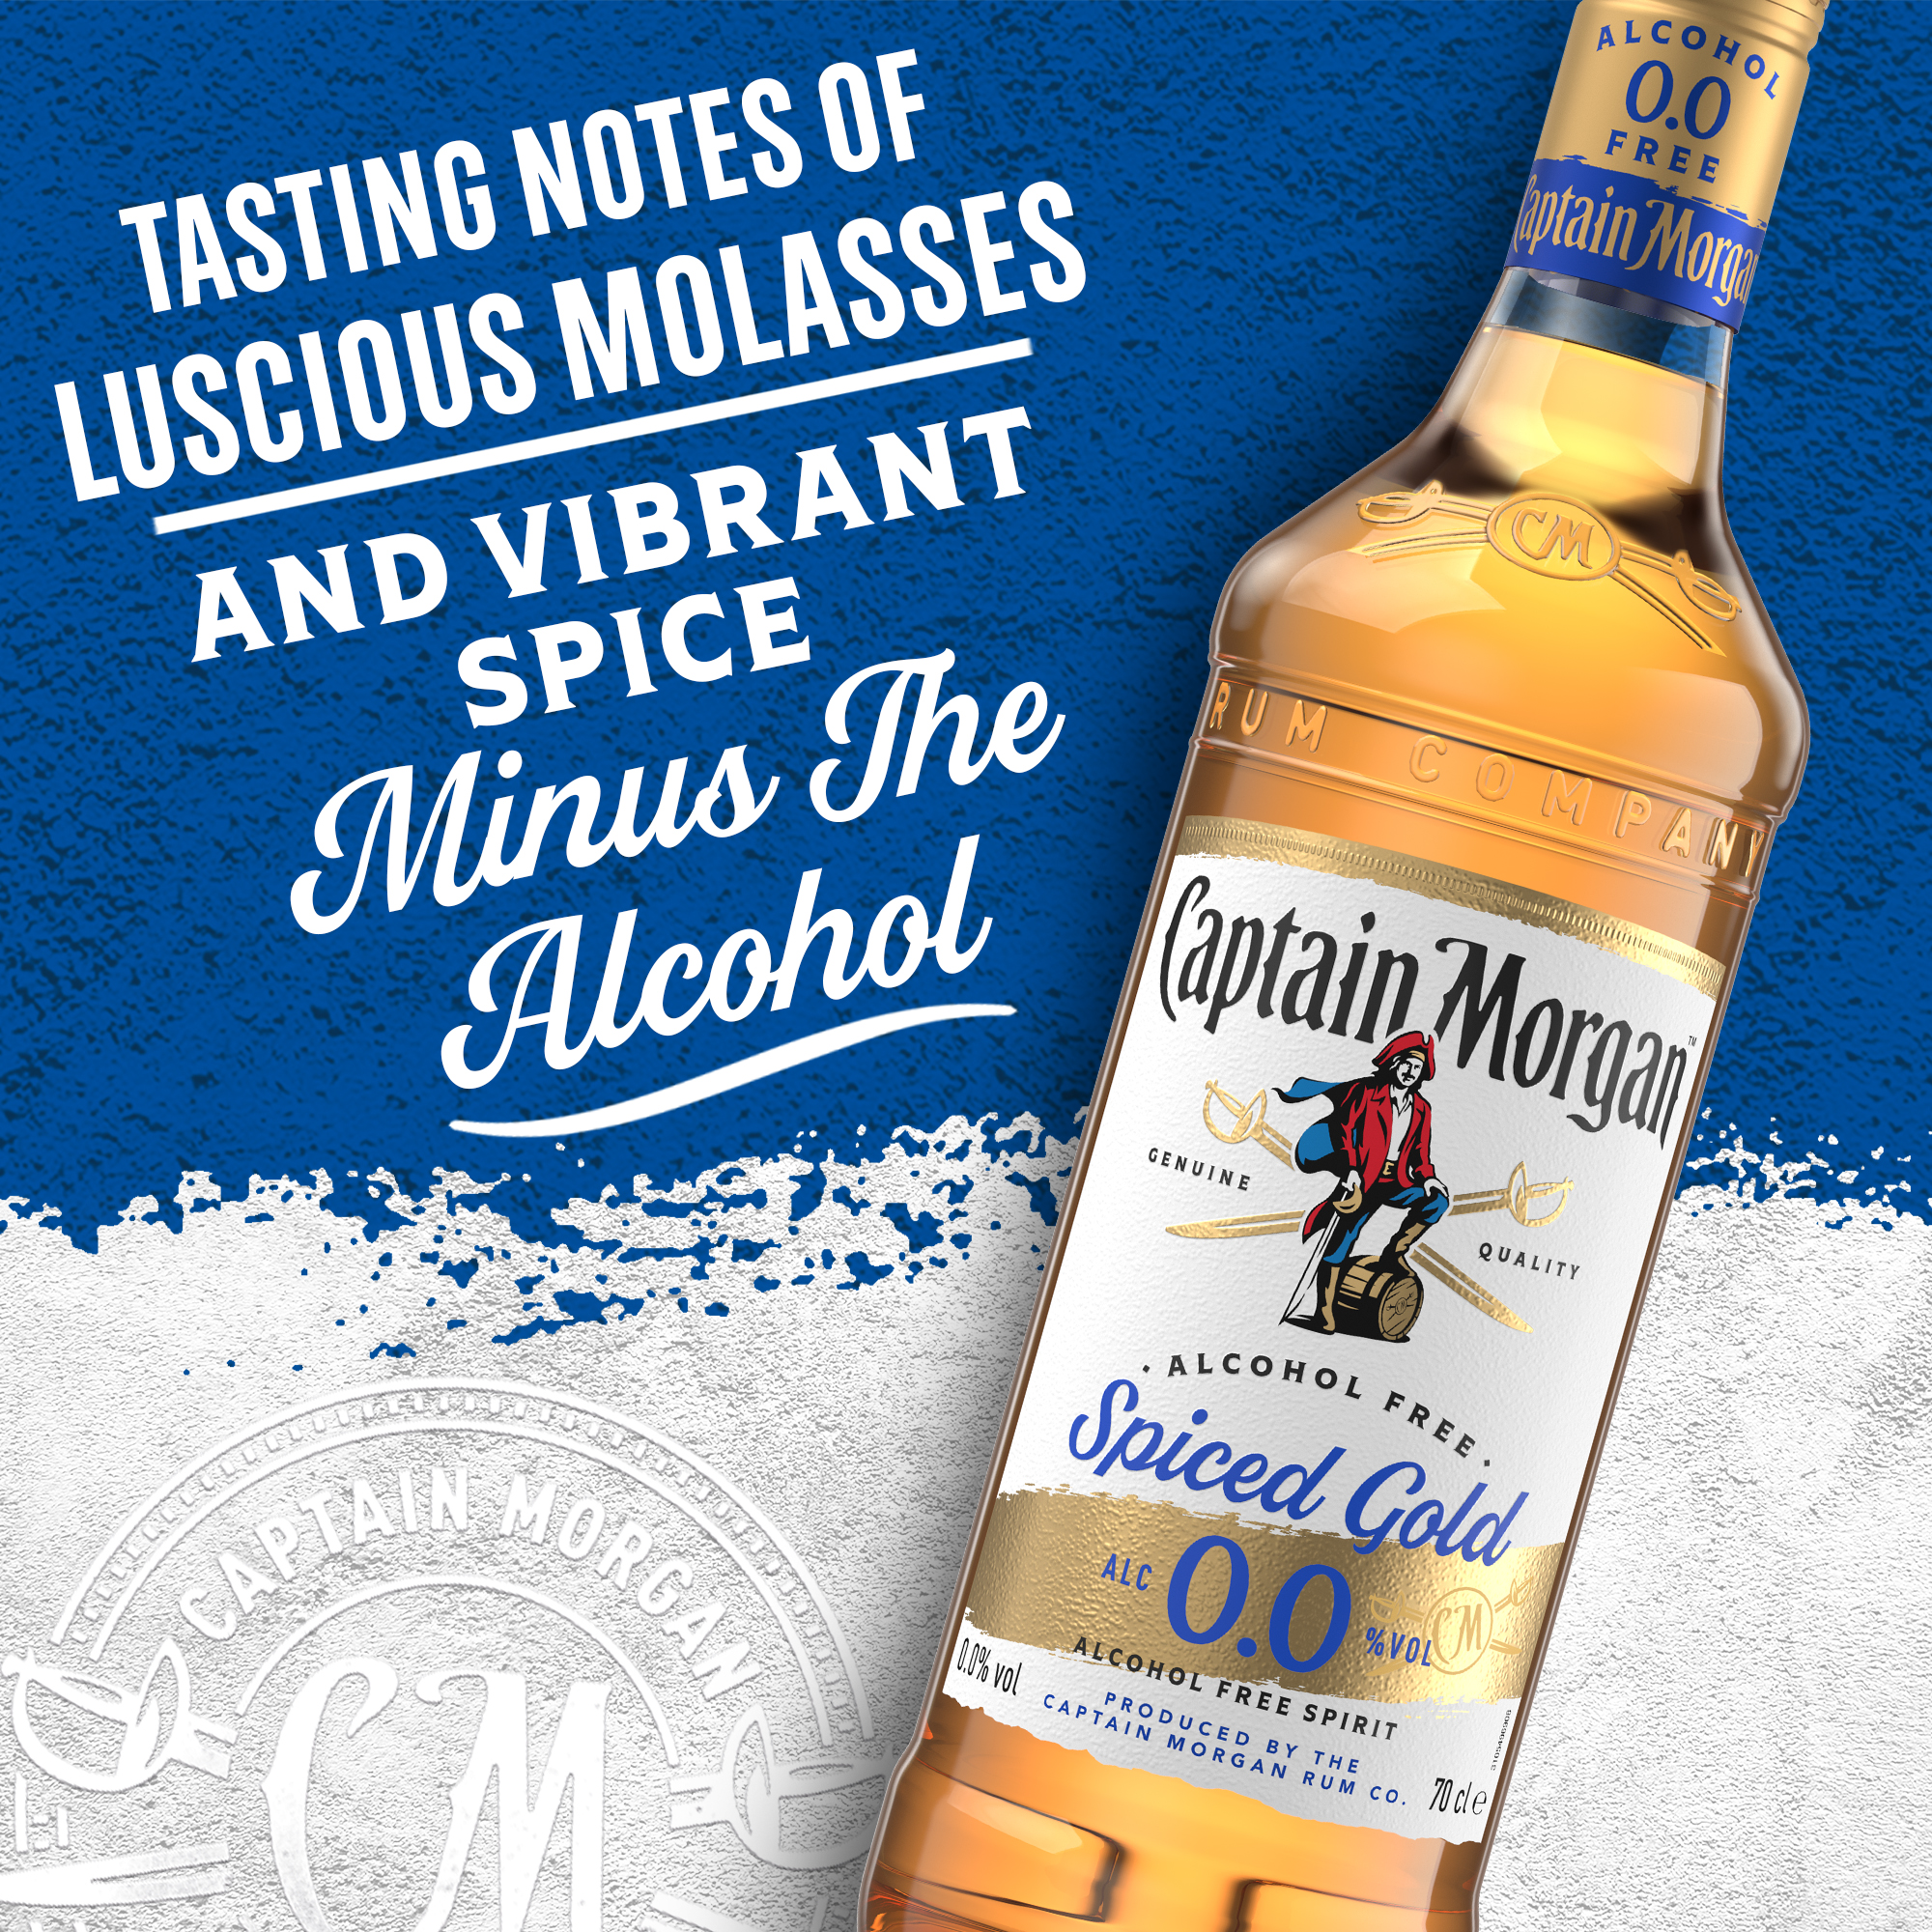 Captain Morgan Spiced Gold 0.0 Alcohol Free Spirit, 70cl | The Bar | Billiger Montag